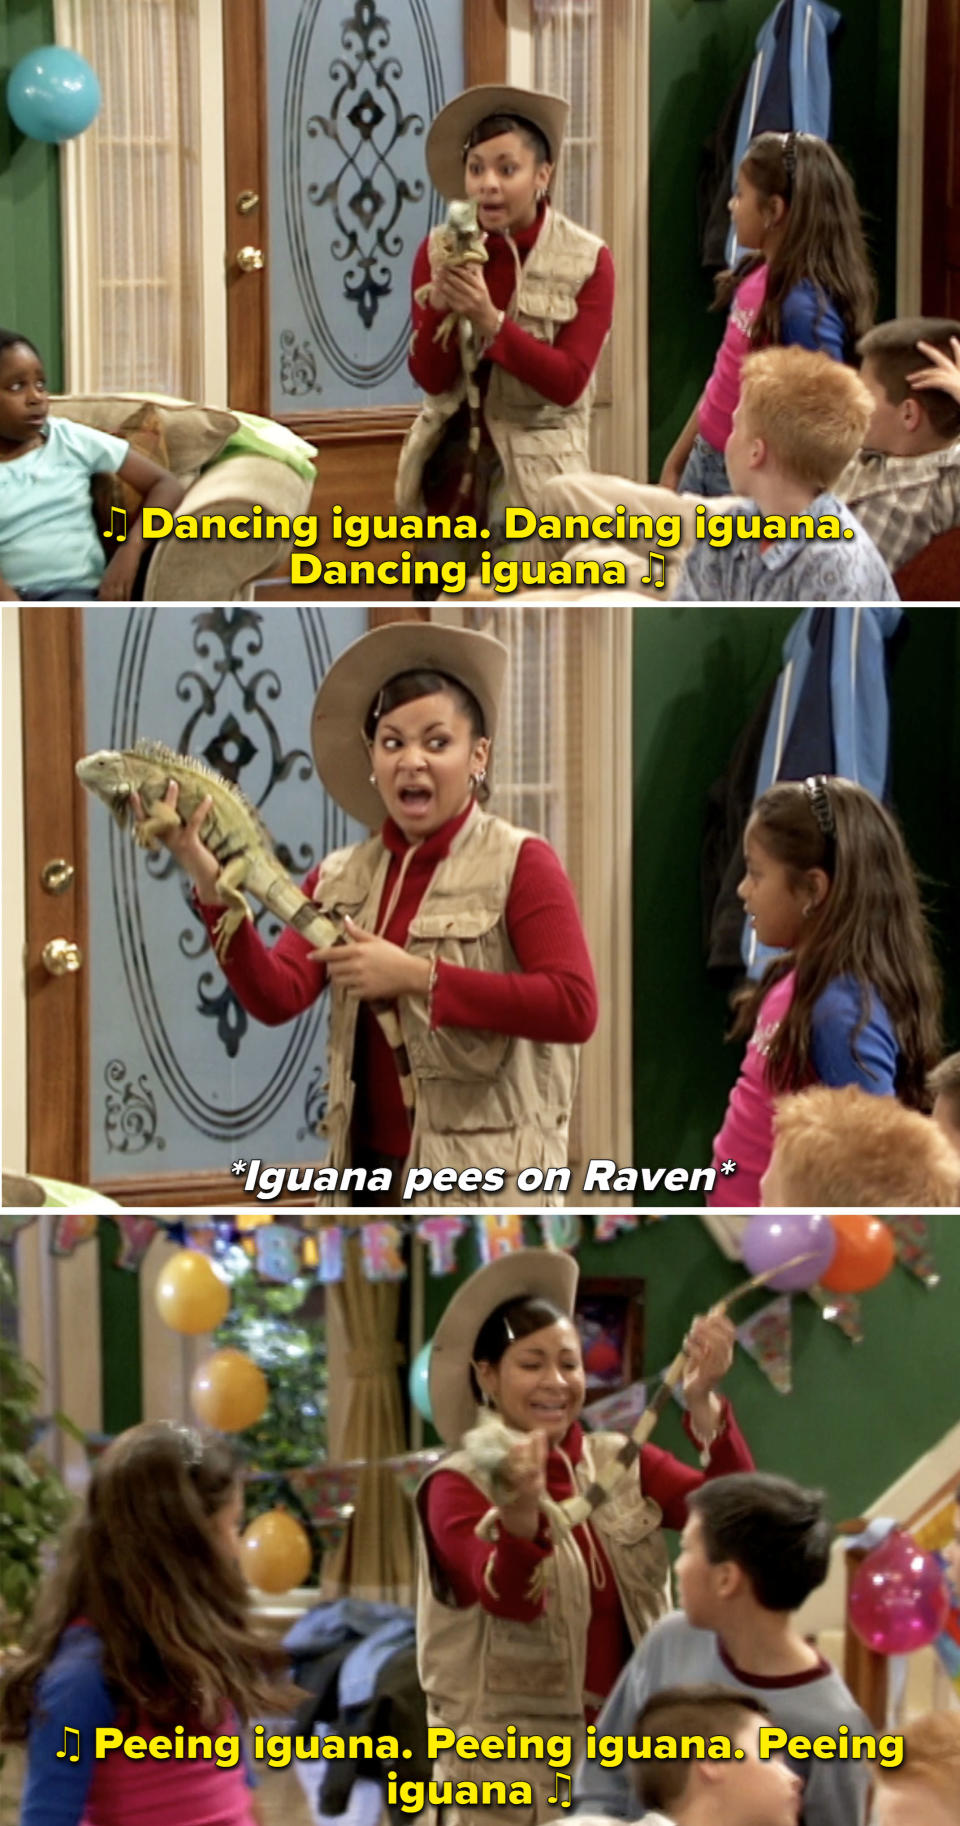   Disney Channel